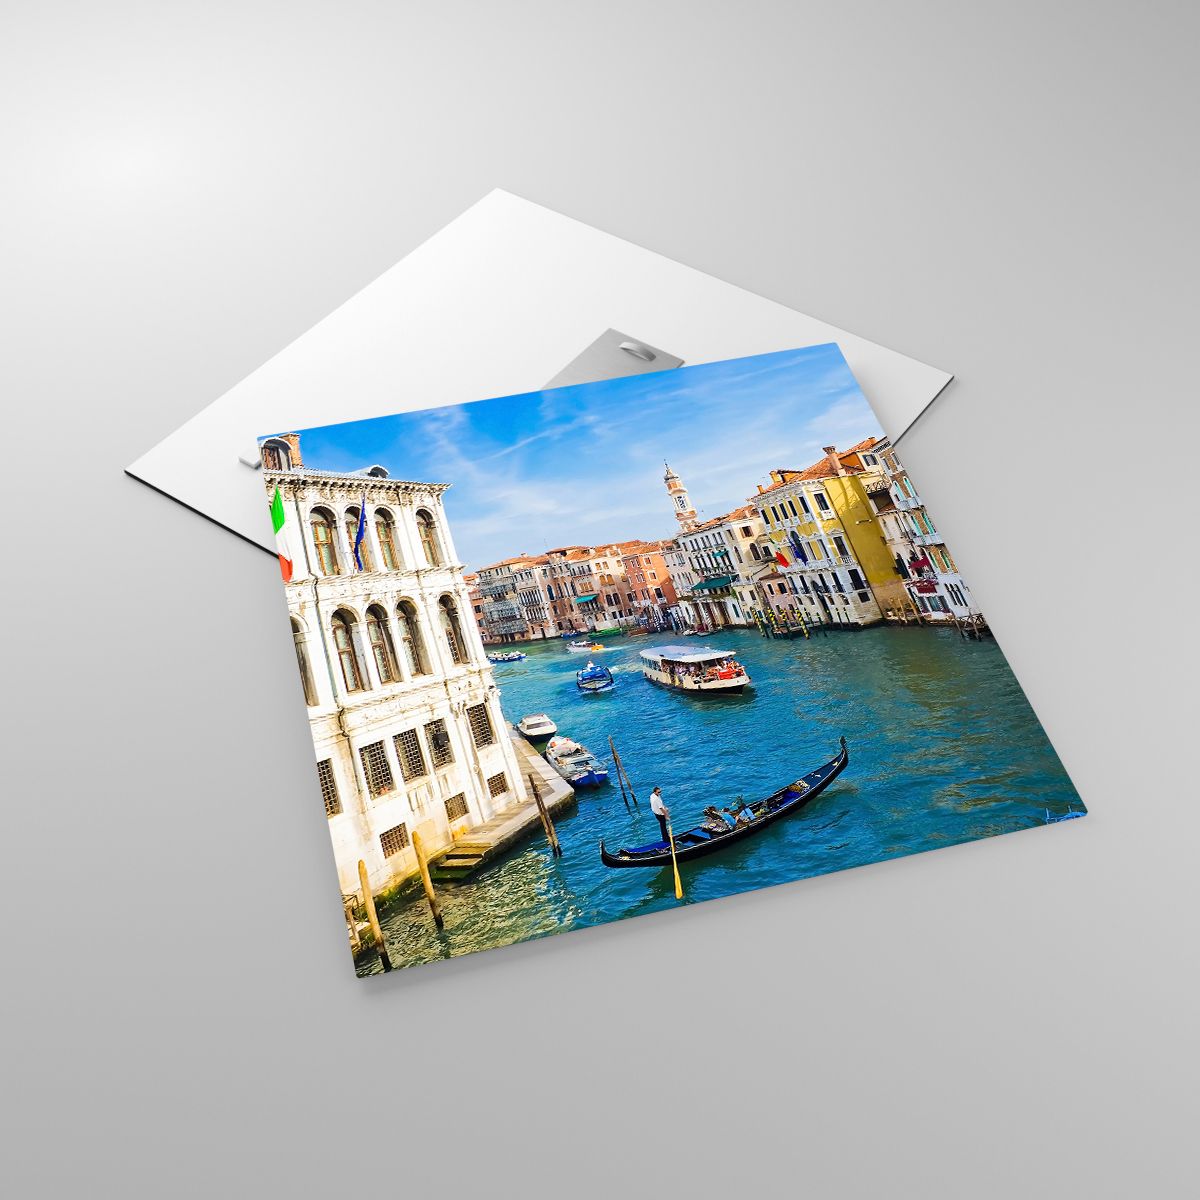 Quadri Venezia, Quadri Architettura, Quadri Canal Grande, Quadri Gondola, Quadri Viaggi